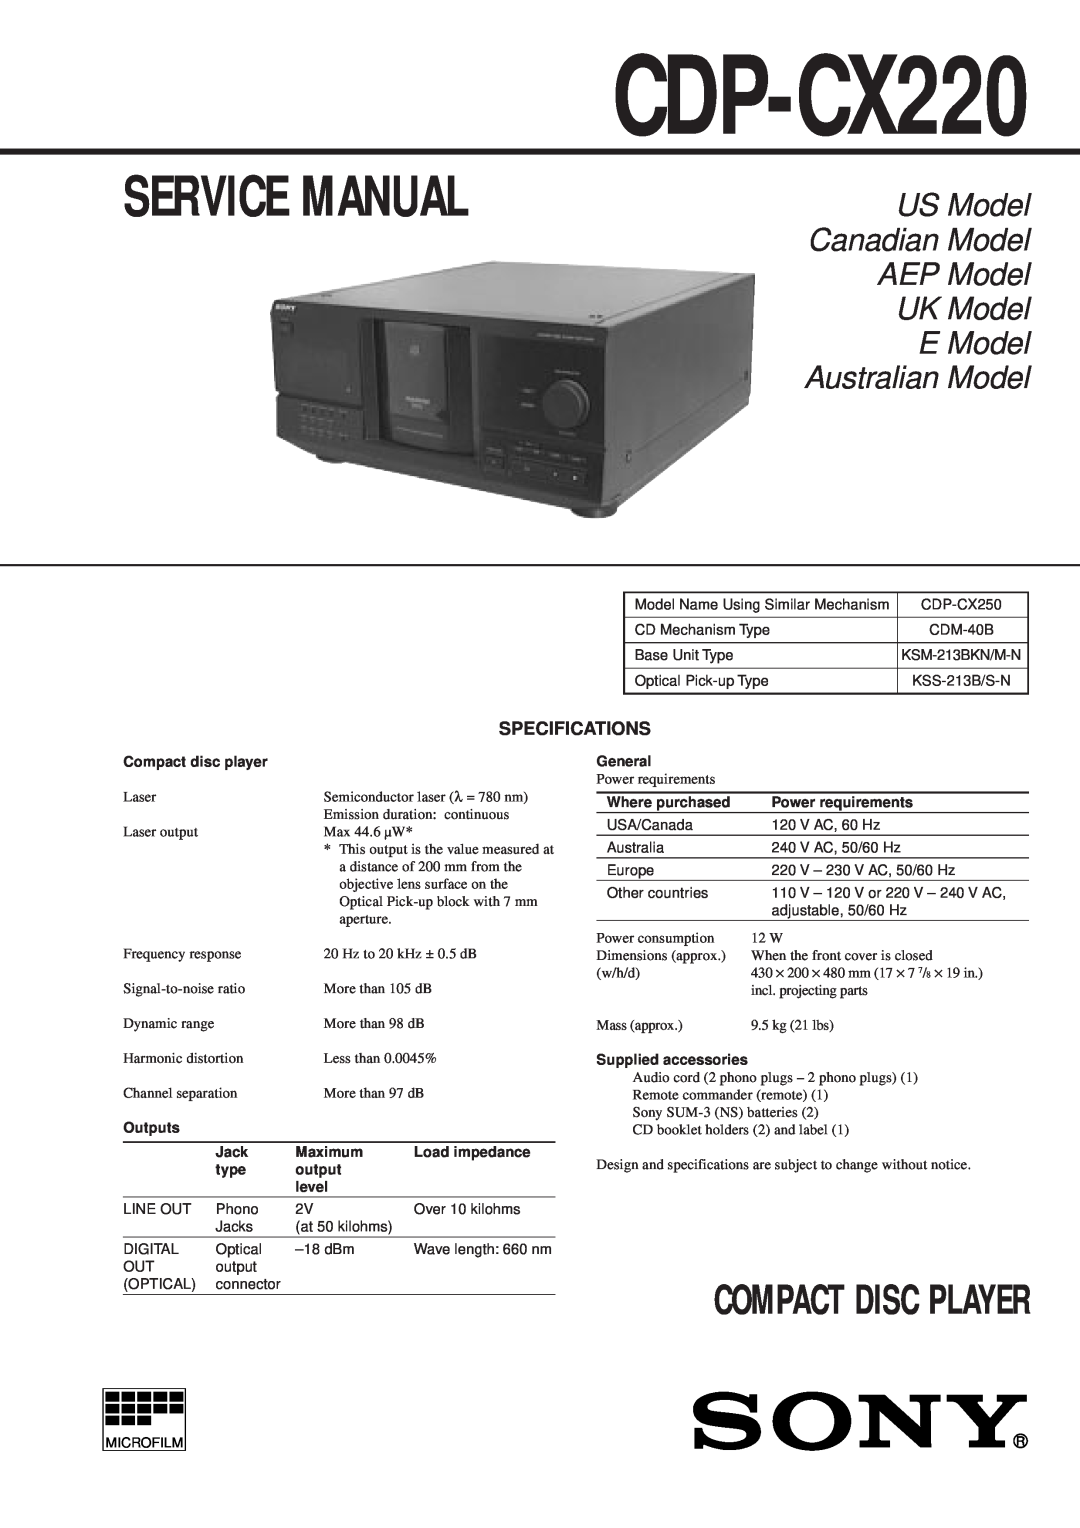 Sony Ericsson CDP-CX220 service manual US Model Canadian Model AEP Model UK Model, E Model Australian Model 